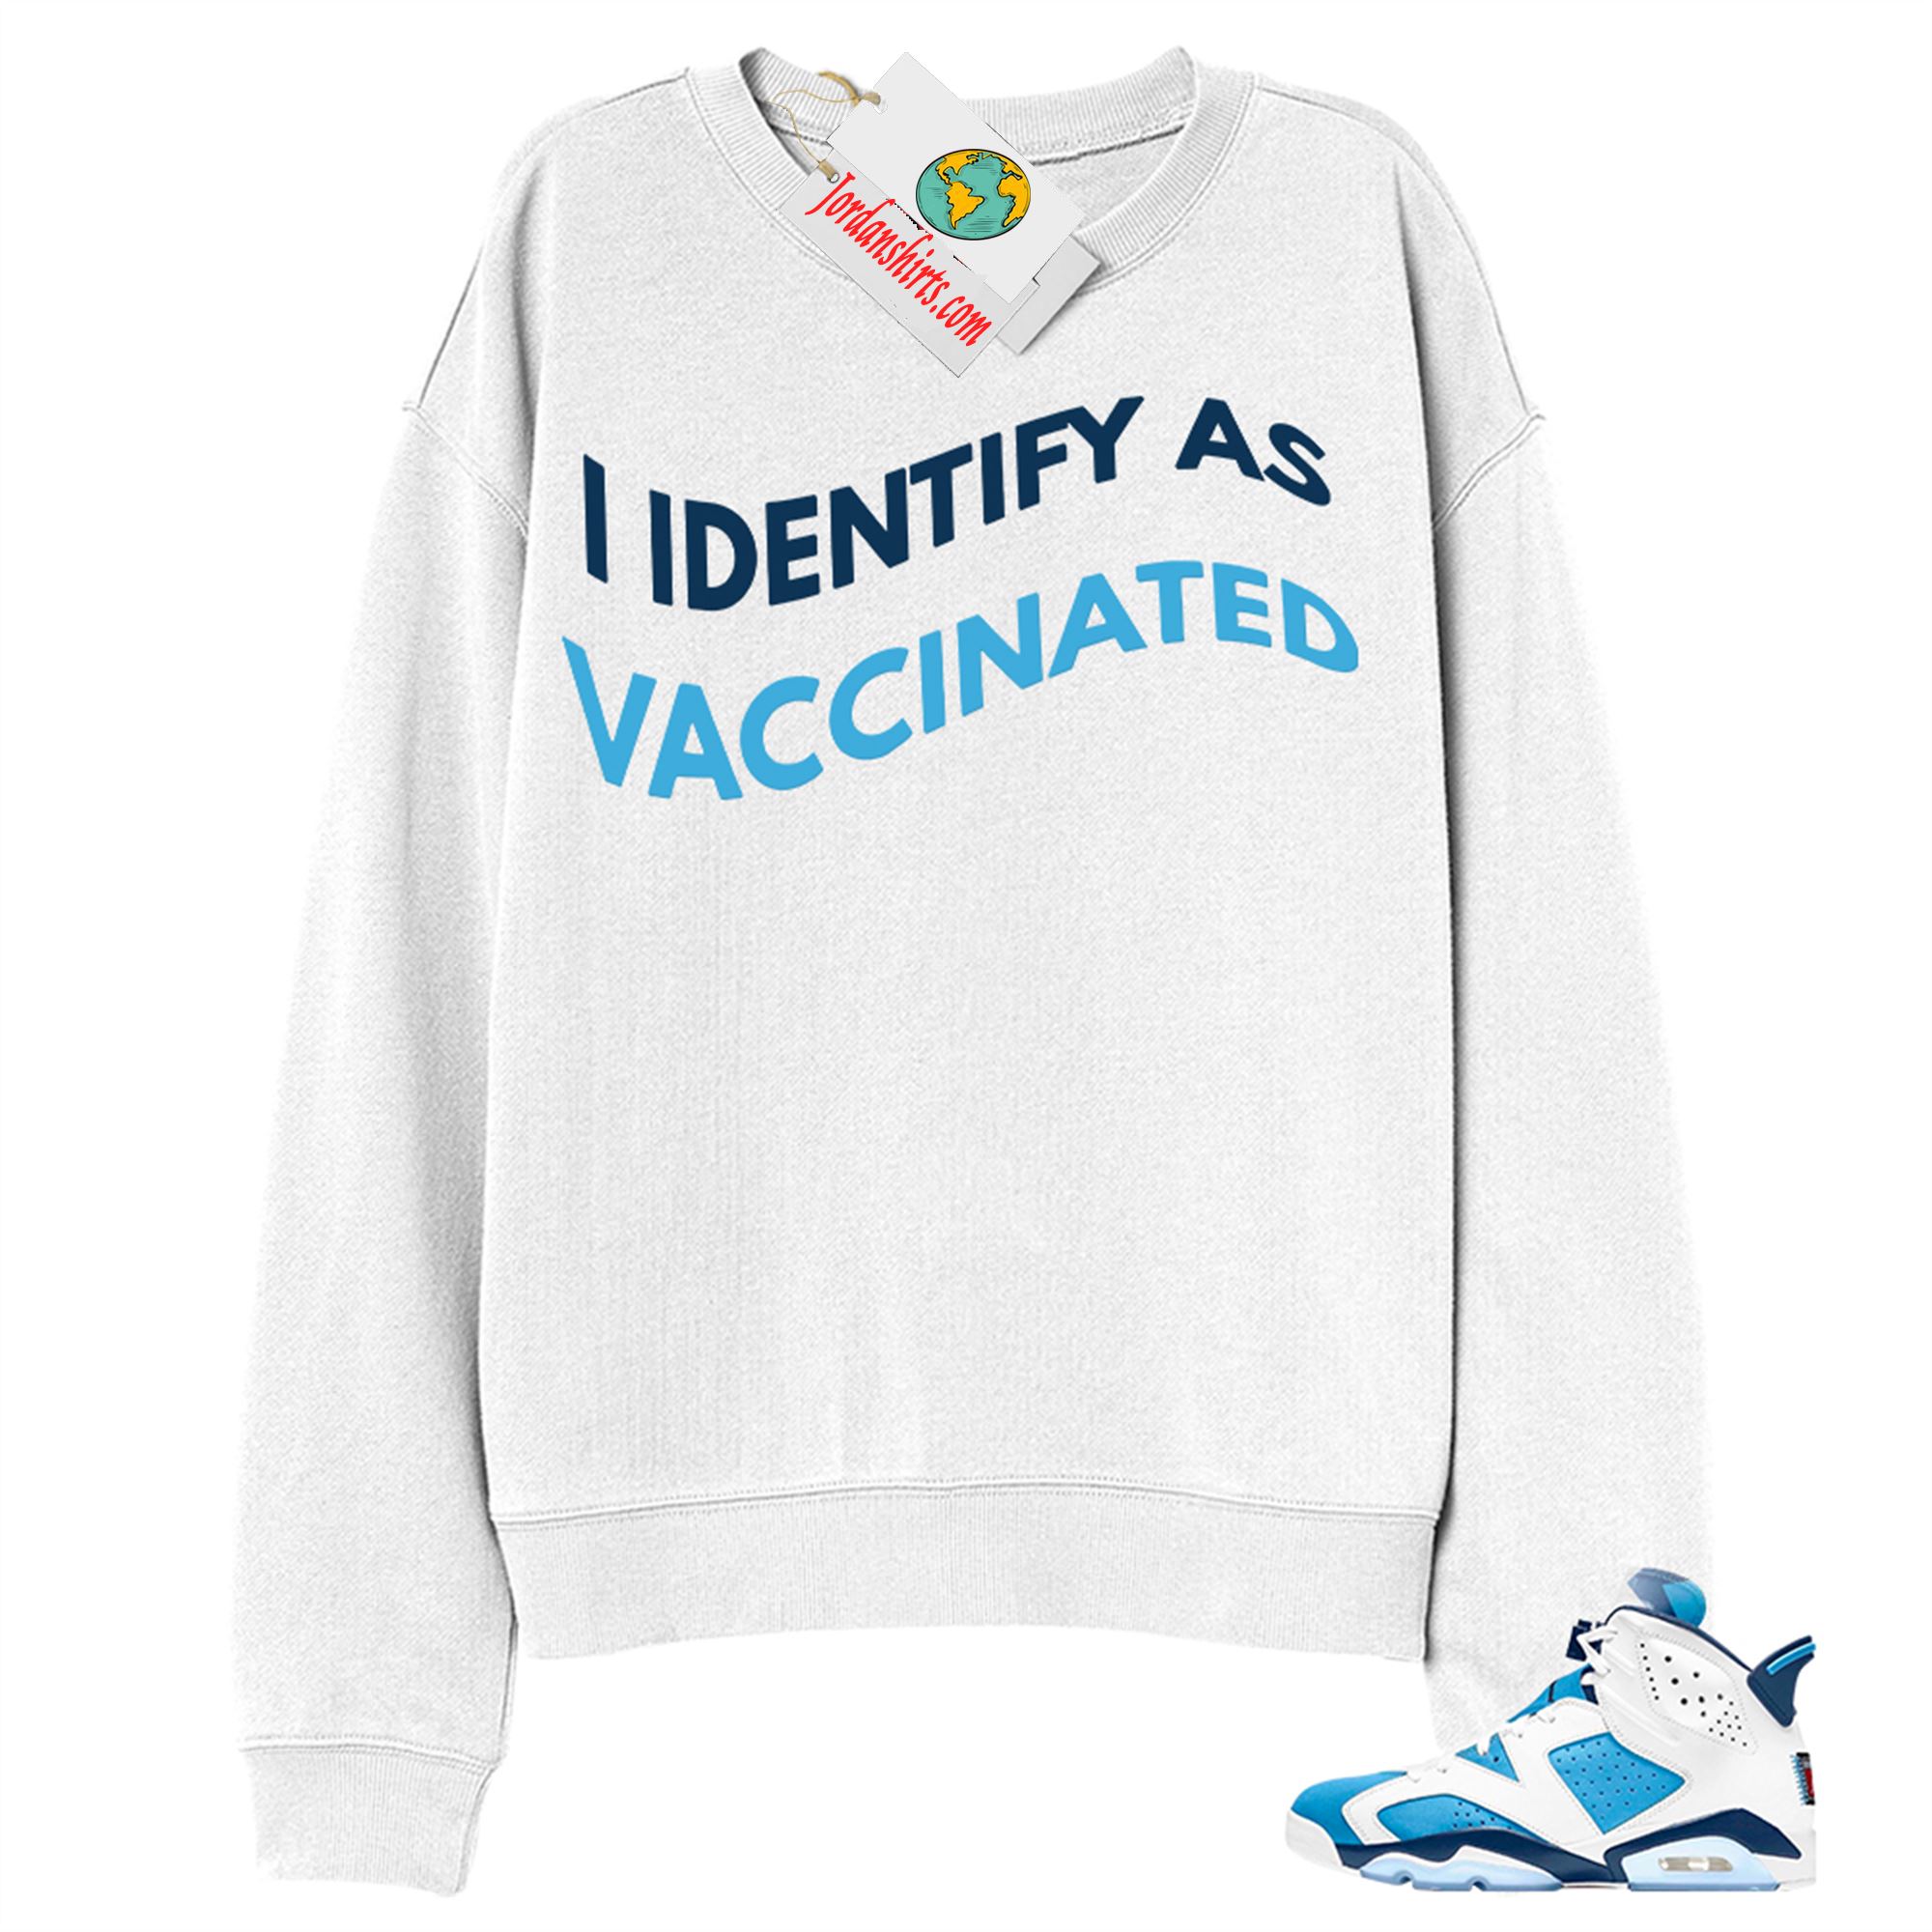 Jordan 6 Sweatshirt, I Identify As Vaccinated White Sweatshirt Air Jordan 6 Unc 6s Full Size Up To 5xl